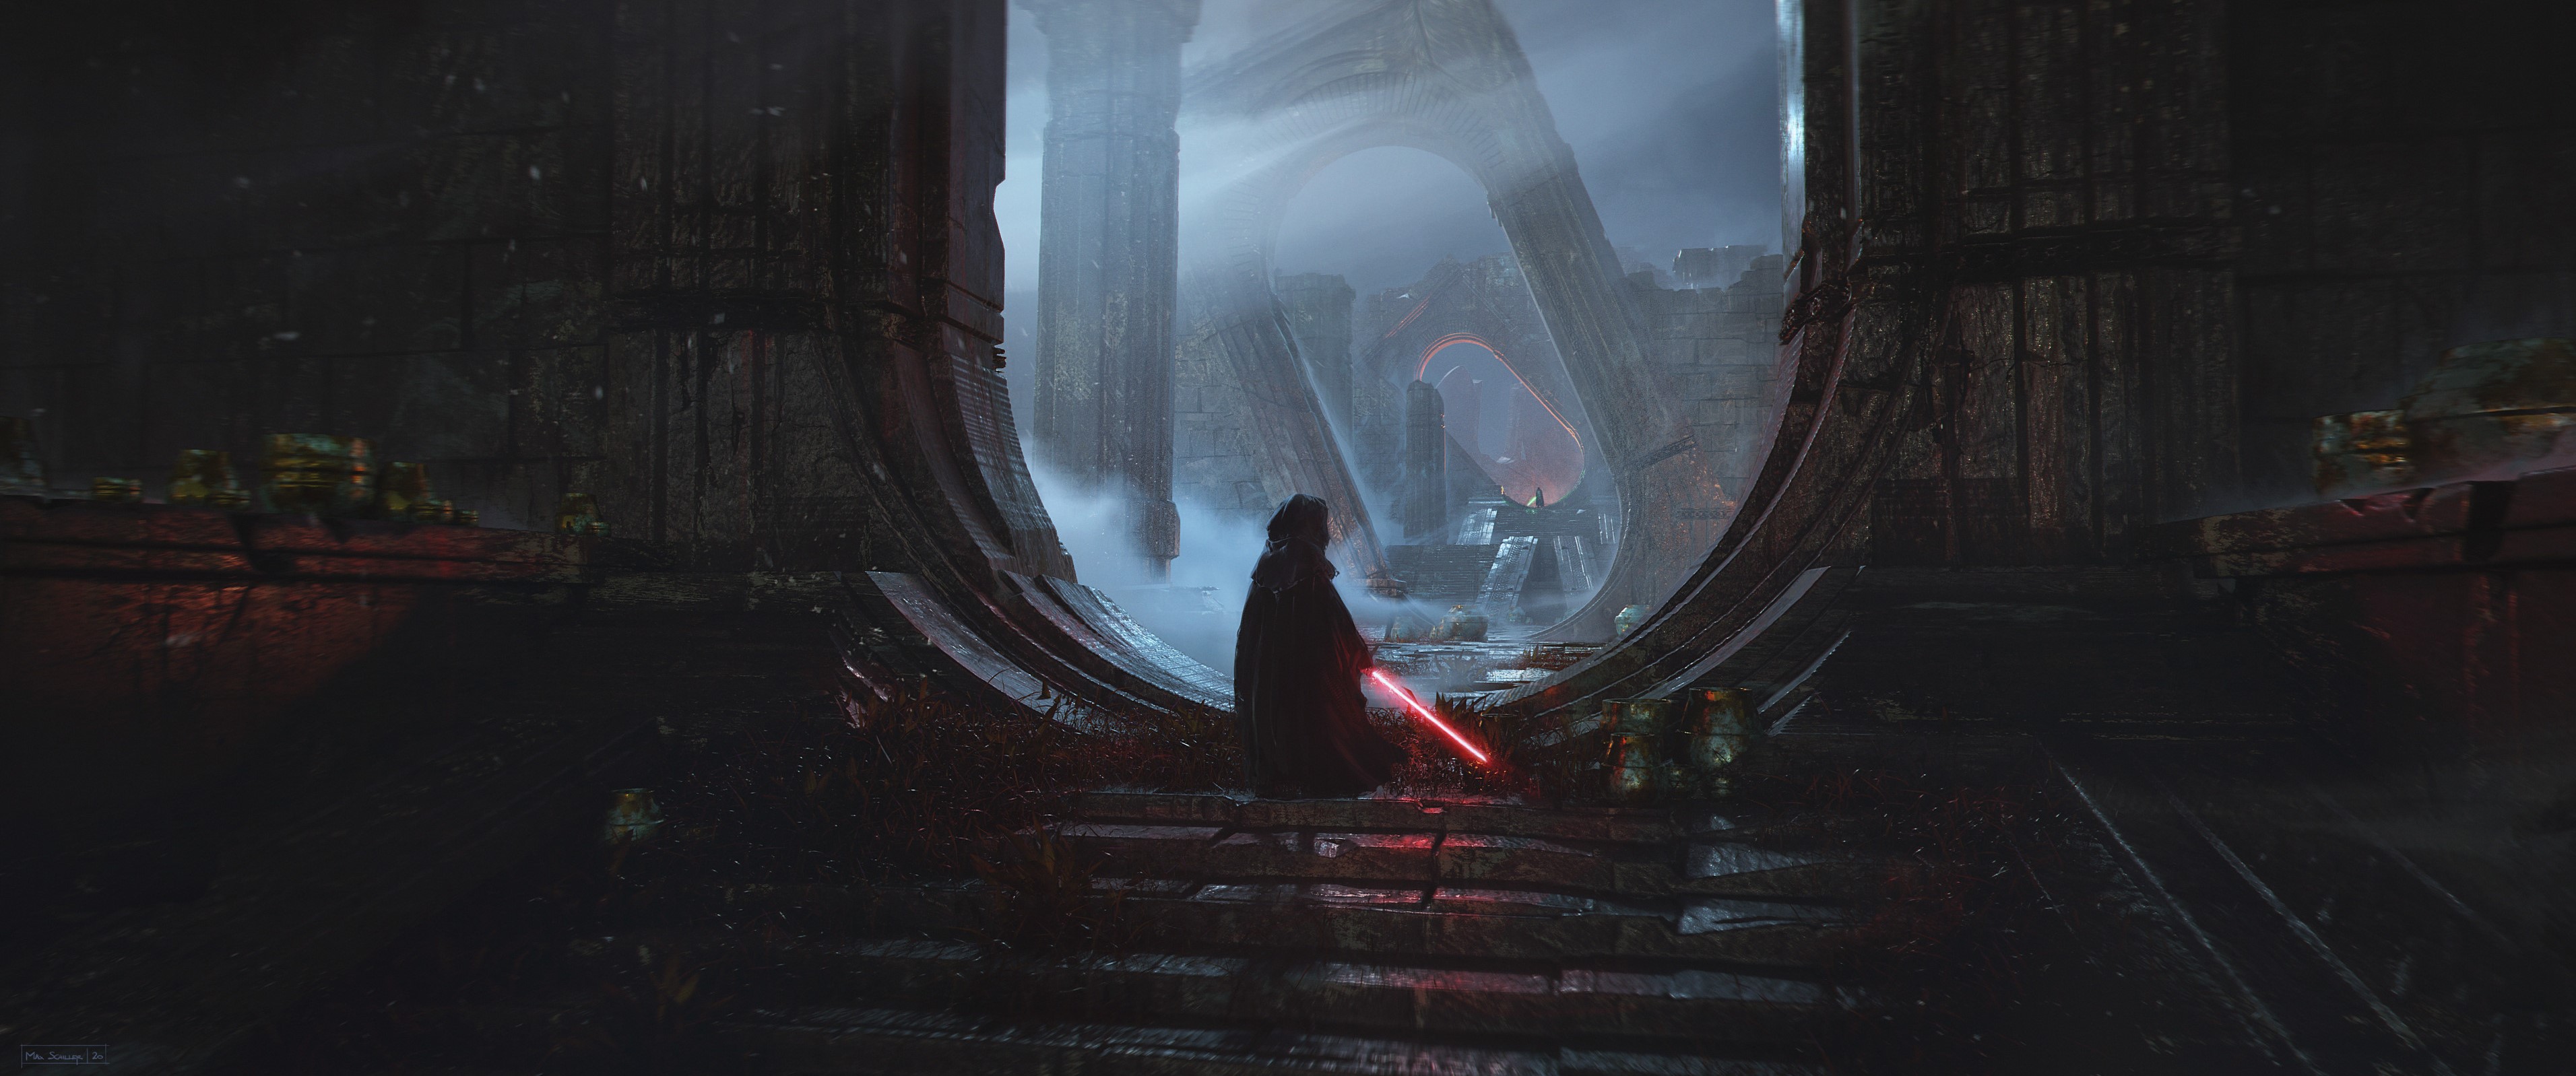 Fantasy Art Artwork Digital Art Star Wars Lightsaber Jedi Sith 3824x1598